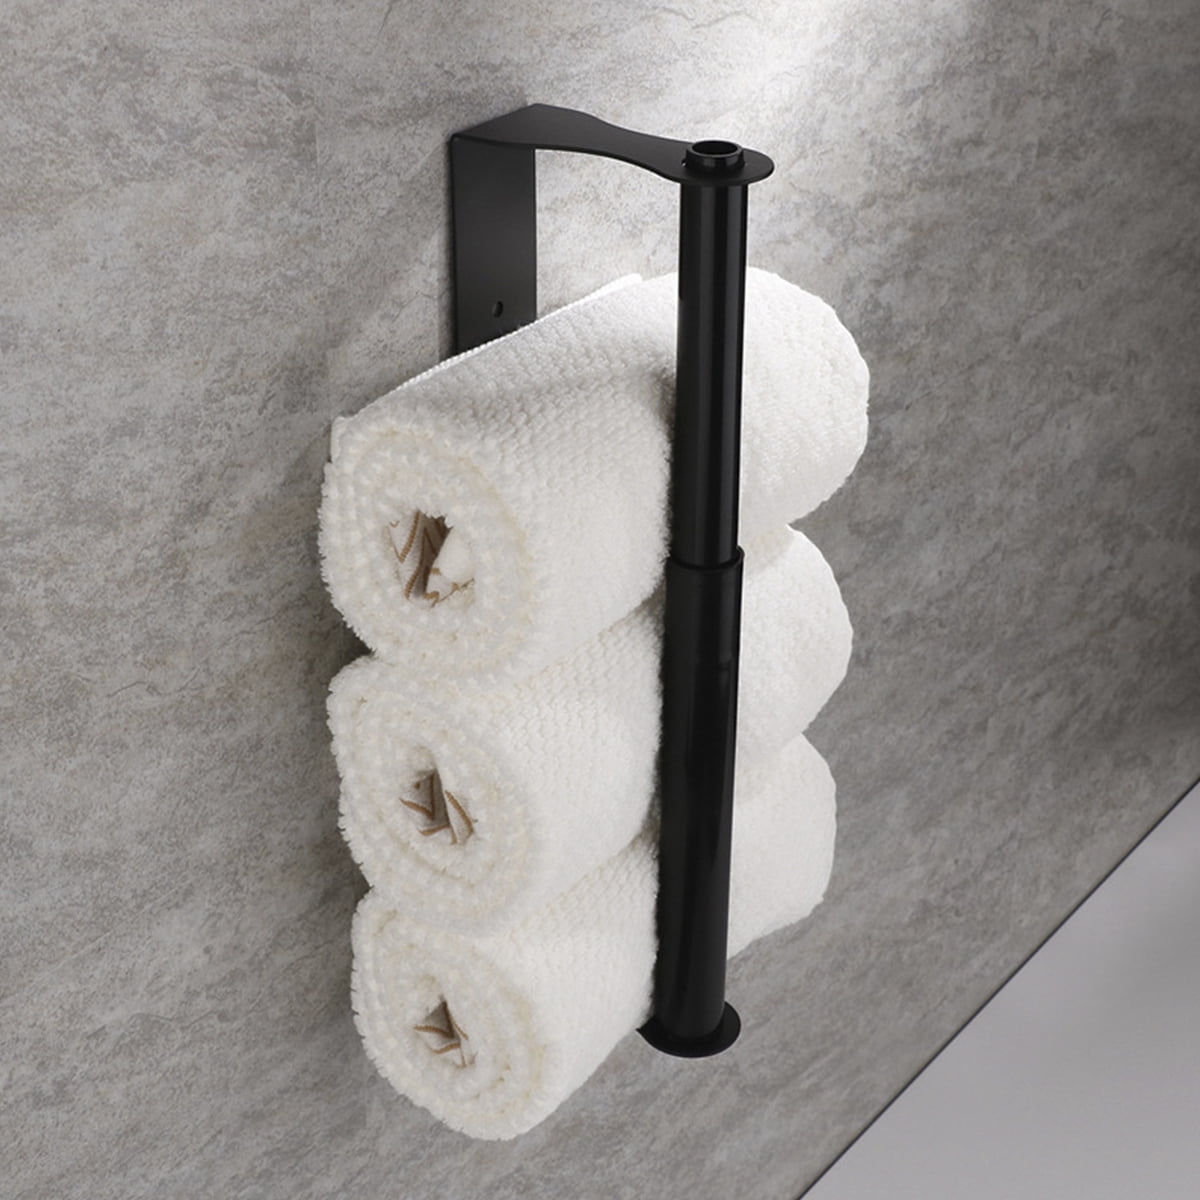 Bcloud Toilet Roll Holder Stand Organizer Rack Cabinet Paper Towel Hanger  Bathroom 